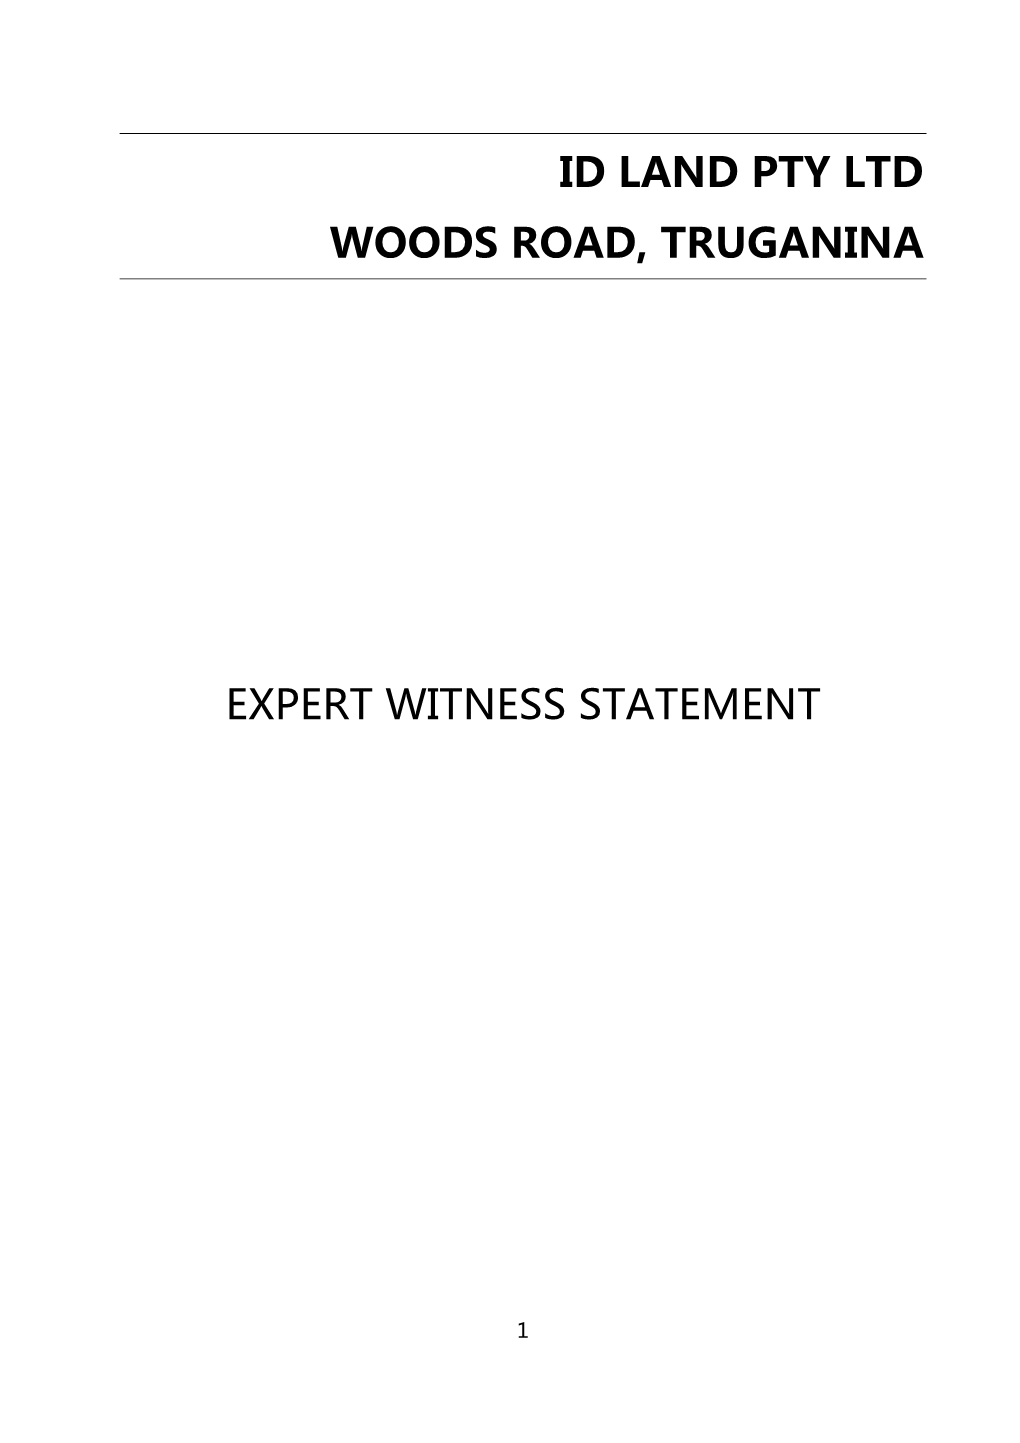 Id Land Pty Ltd Woods Road, Truganina Expert Witness